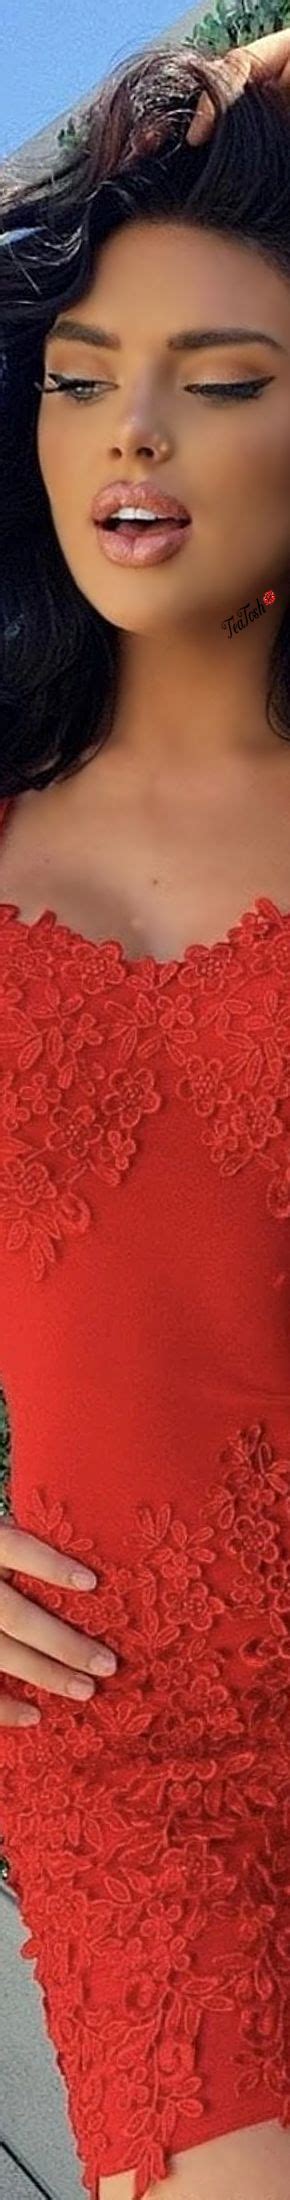 Téa Tosh Kelsie Jean Smeby 🦋kjsmeby Teatosh Red Fashion Beauty